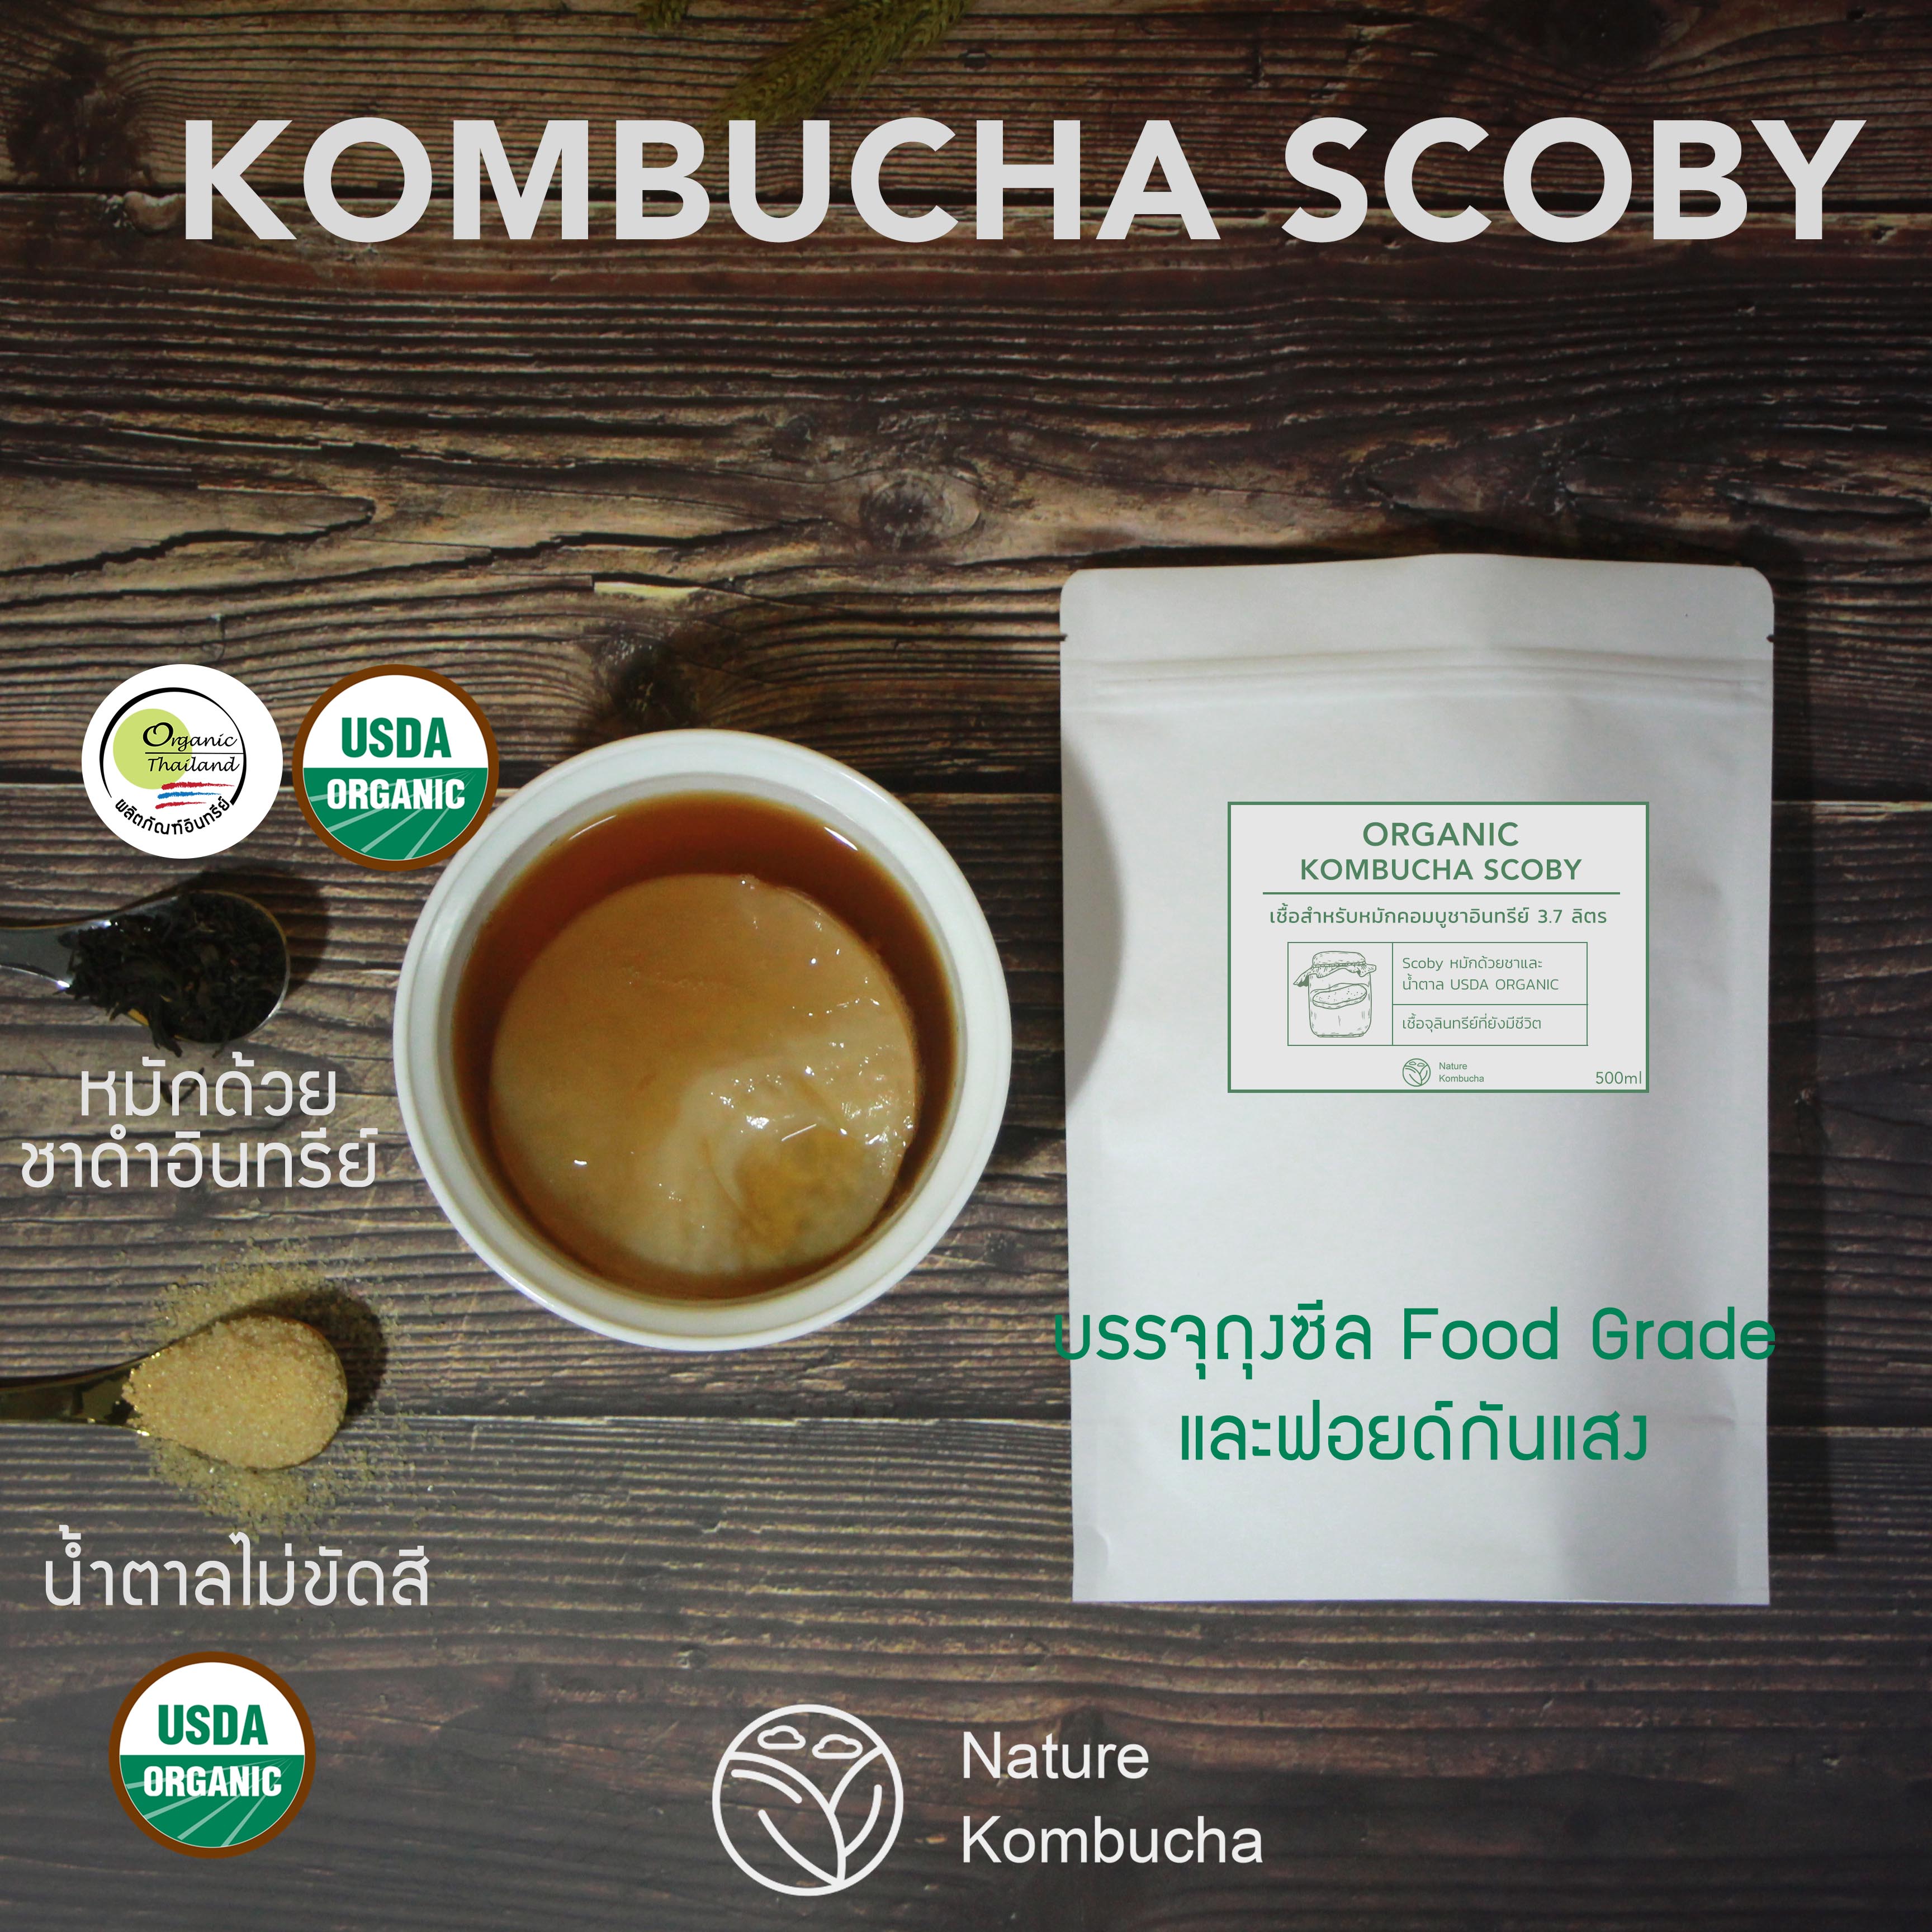 Organic Kombucha Scoby 400ml +FB Community Group | หัวเชื้อ ชาหมัก คอมบูชาและเข้าร่วมกรุ๊ป community ตอบถามปัญหาการหมัก | Nature Kombucha